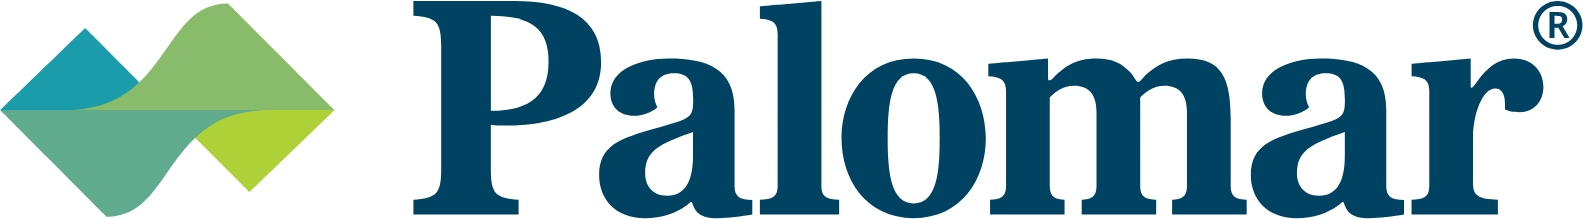 Palomar Holdings logo large (transparent PNG)